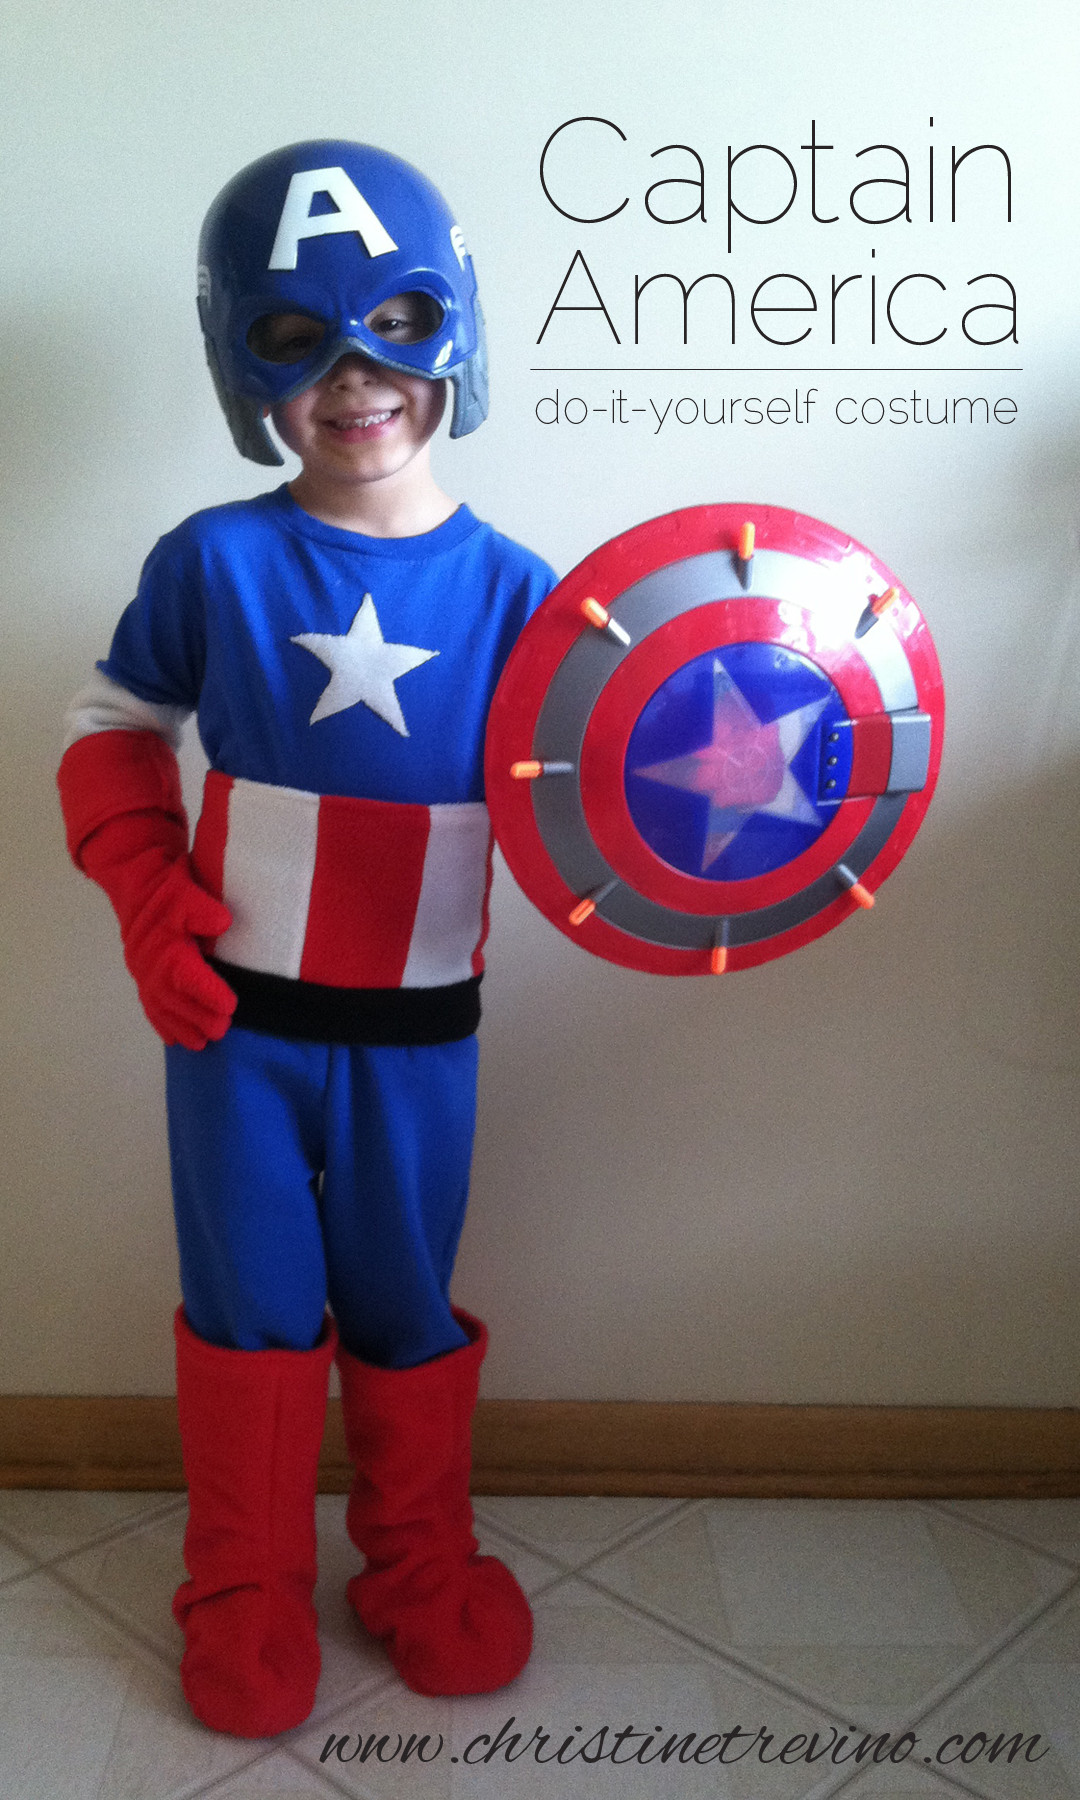 Best ideas about DIY Captain America Costume
. Save or Pin Captain America Costume Christine Trevino Now.